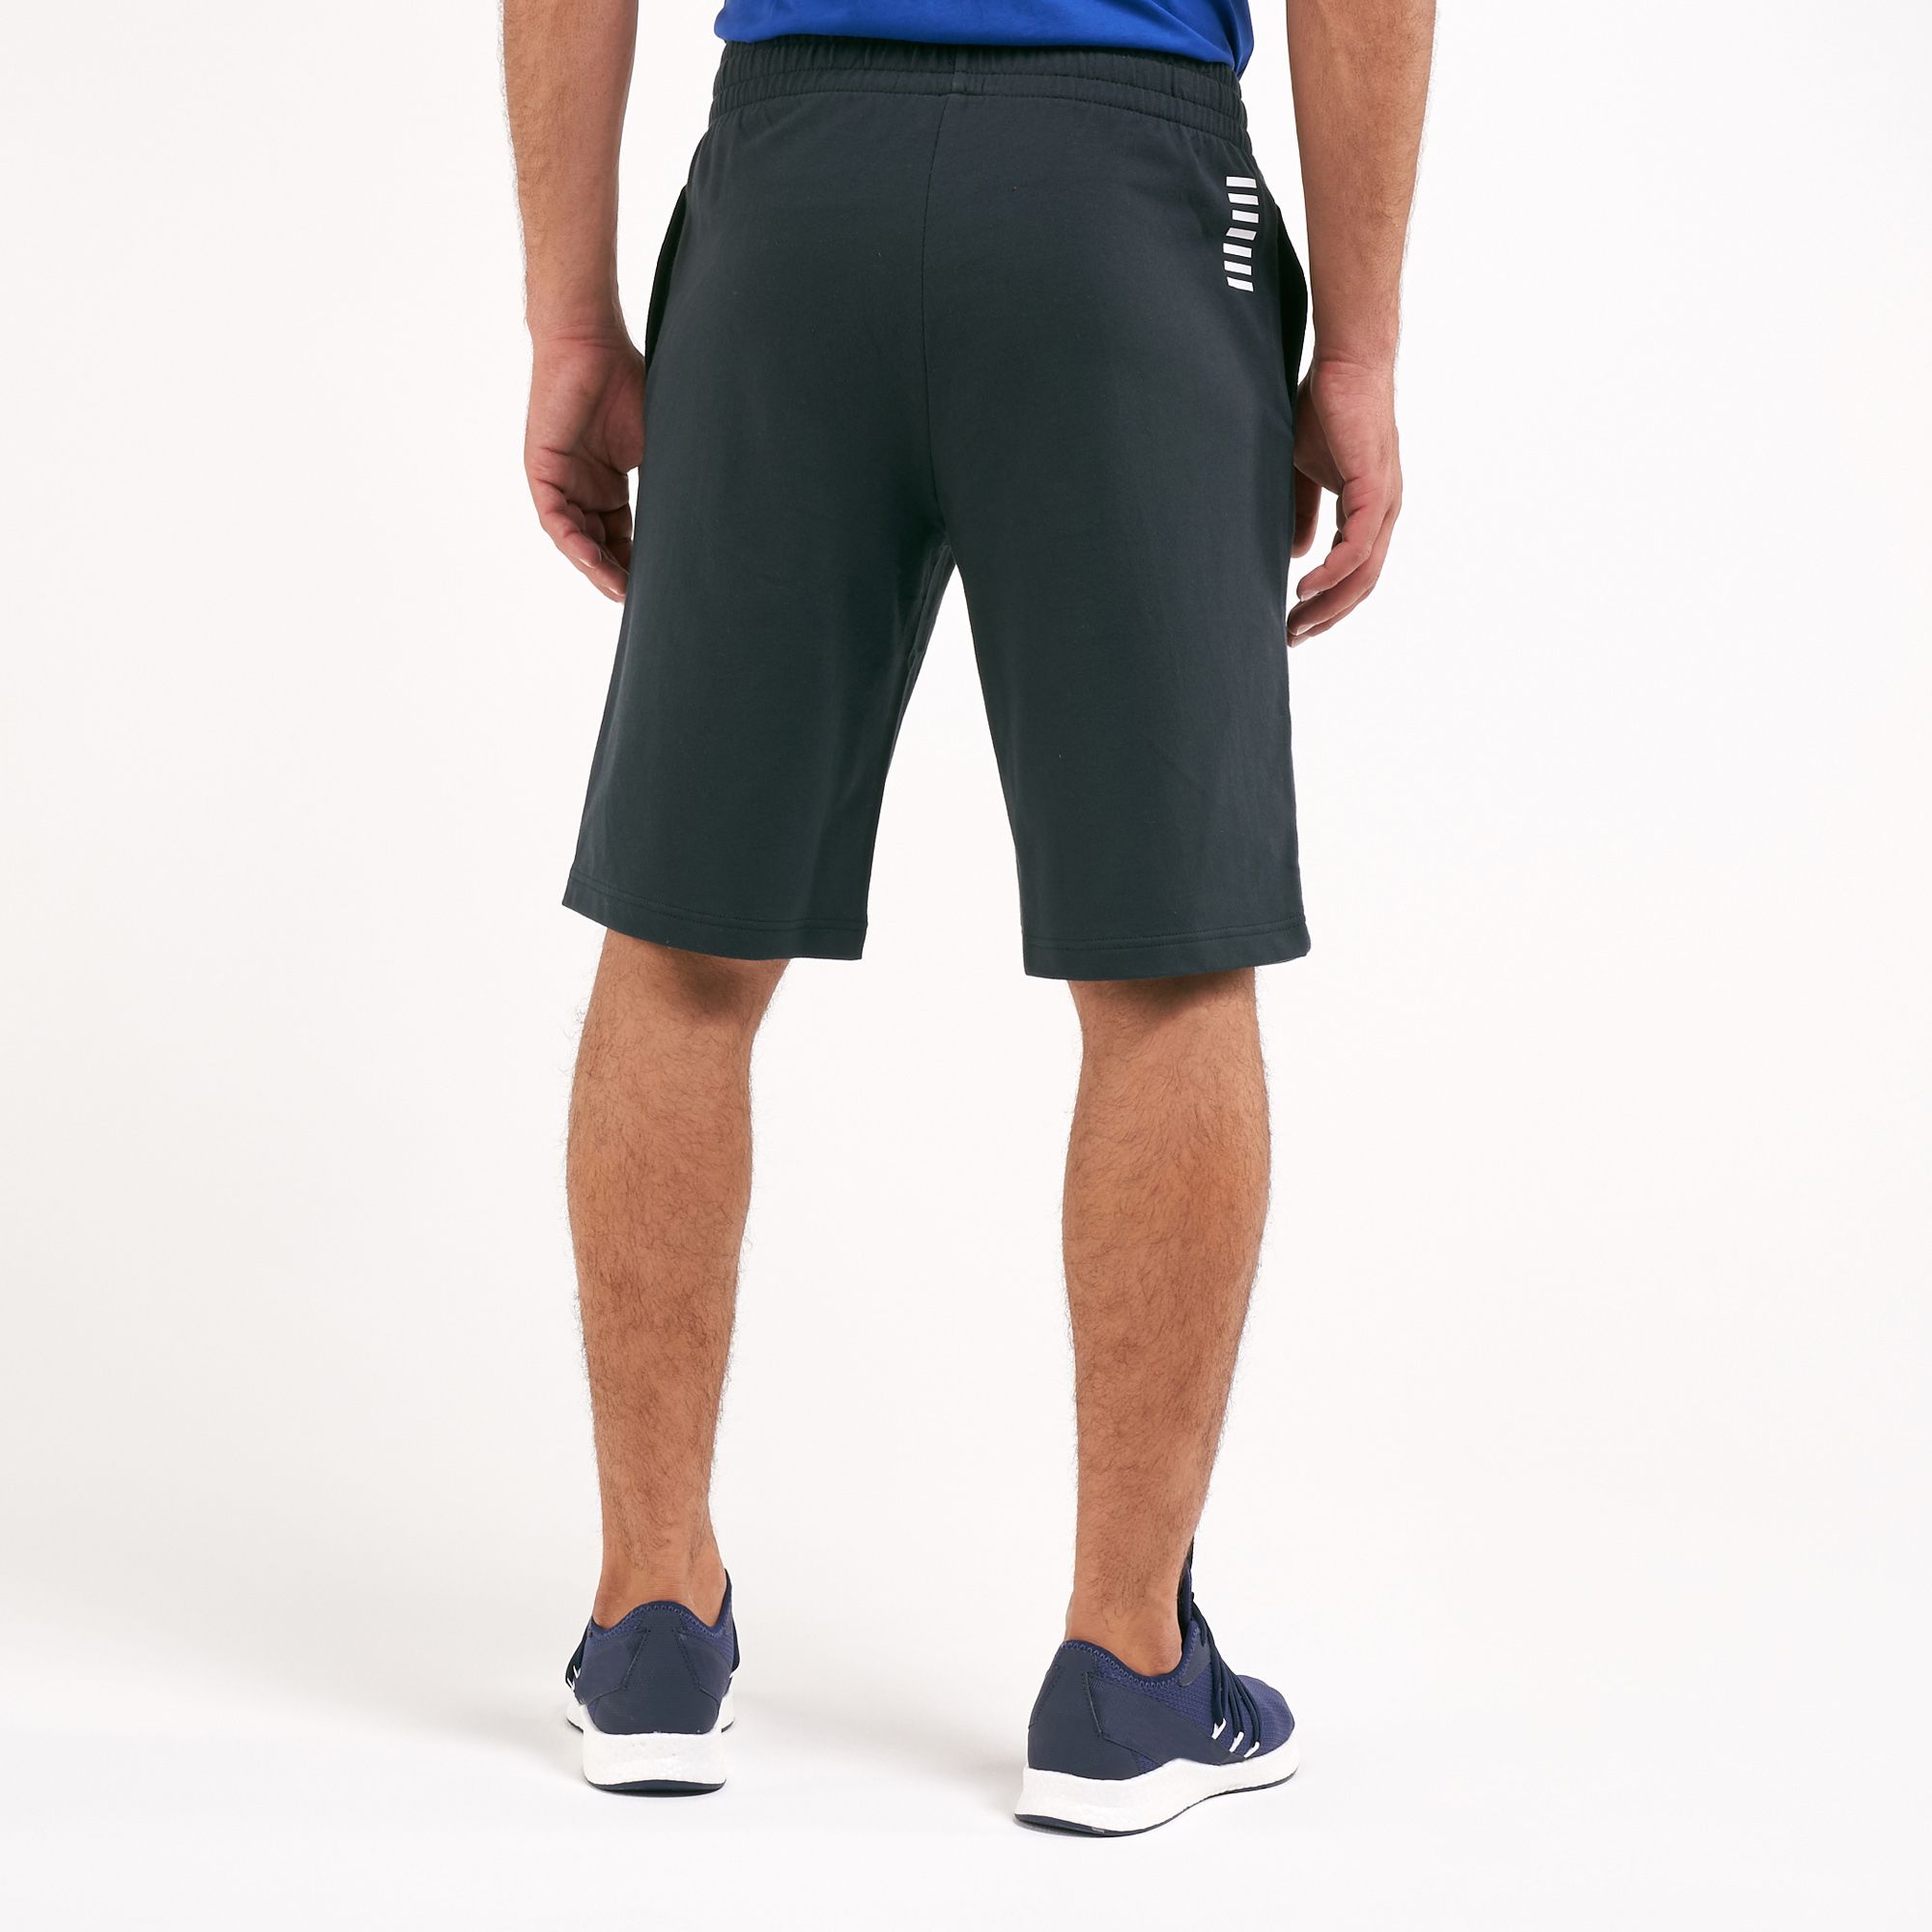 EA7 Emporio Armani Men's Core Shorts | Shorts | Clothing | Men's Sale ...